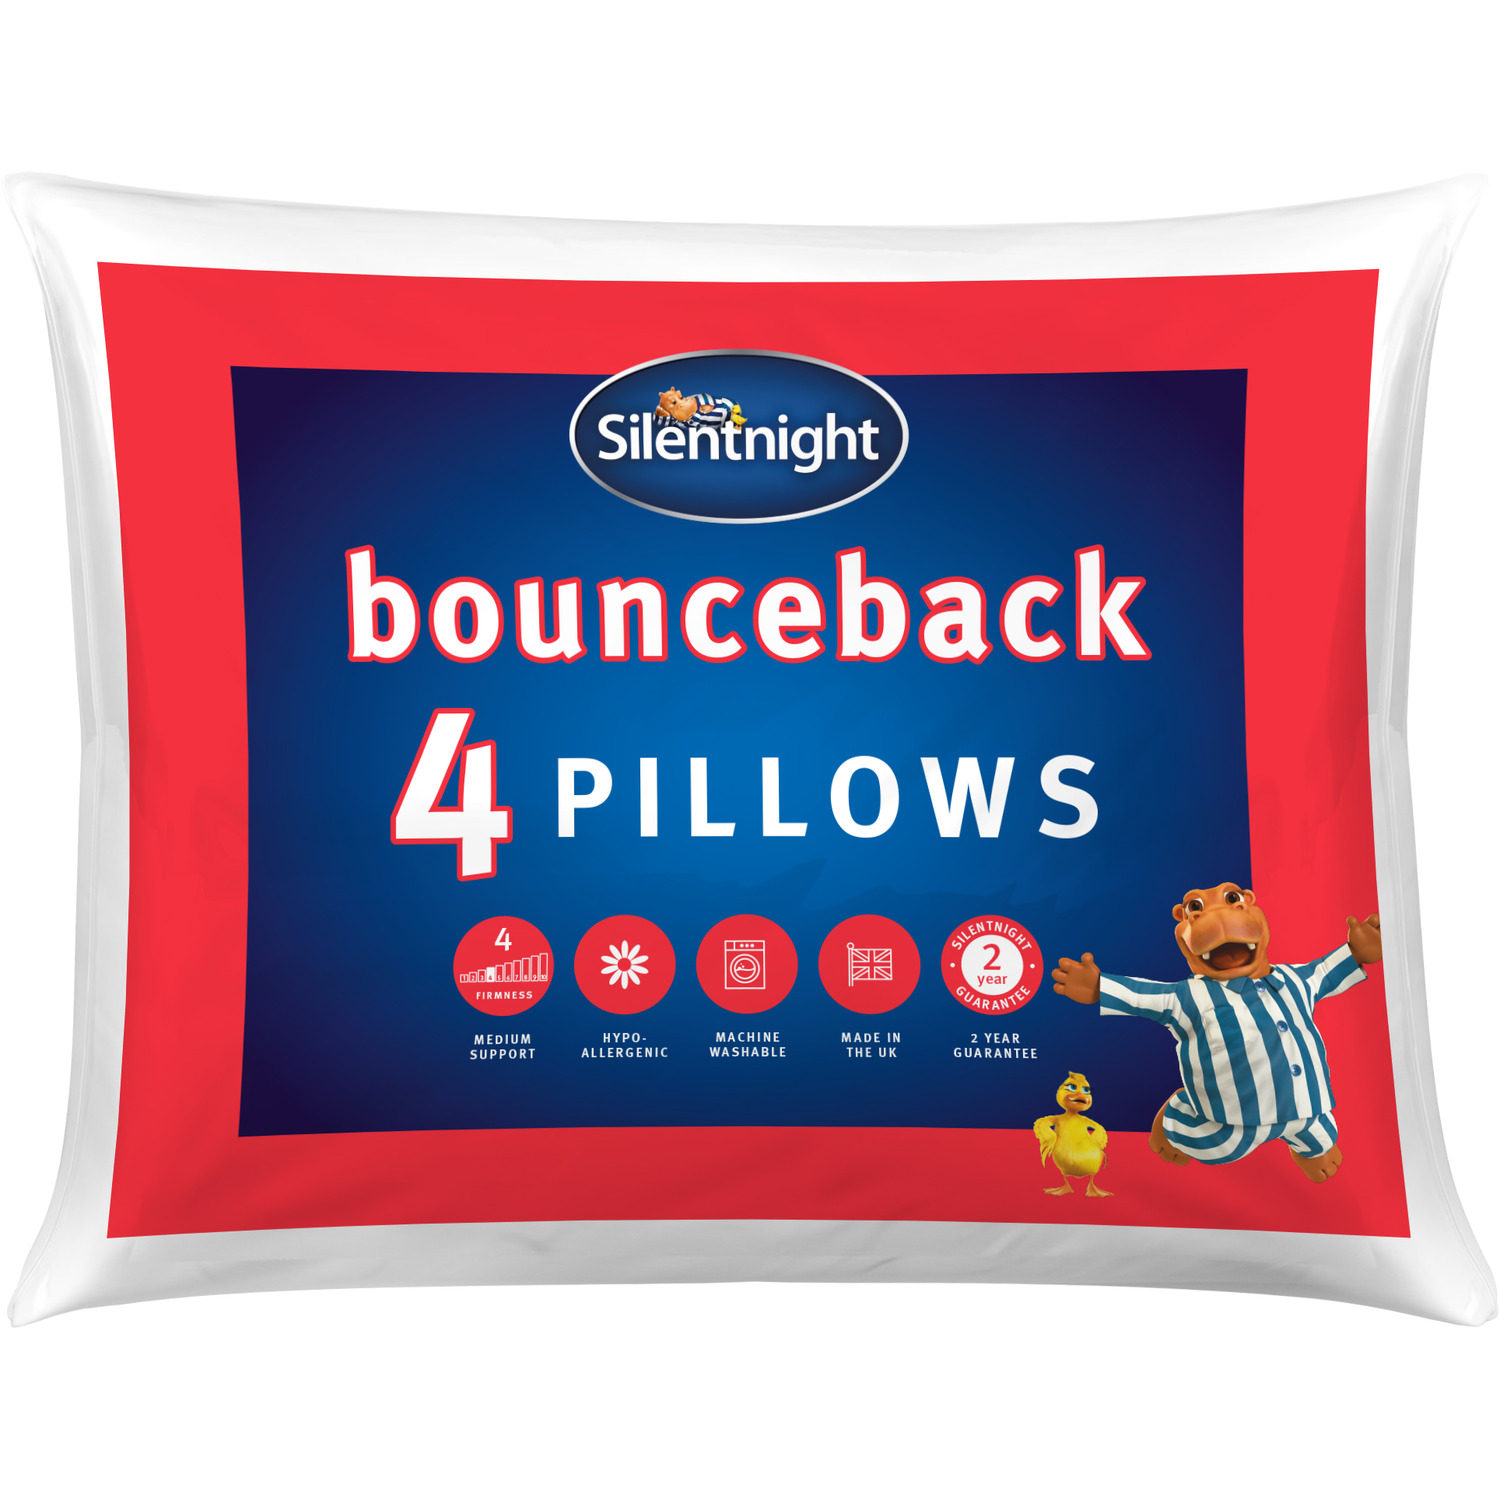 Silentnight White Bounceback Pillows 4 Pack Image 1